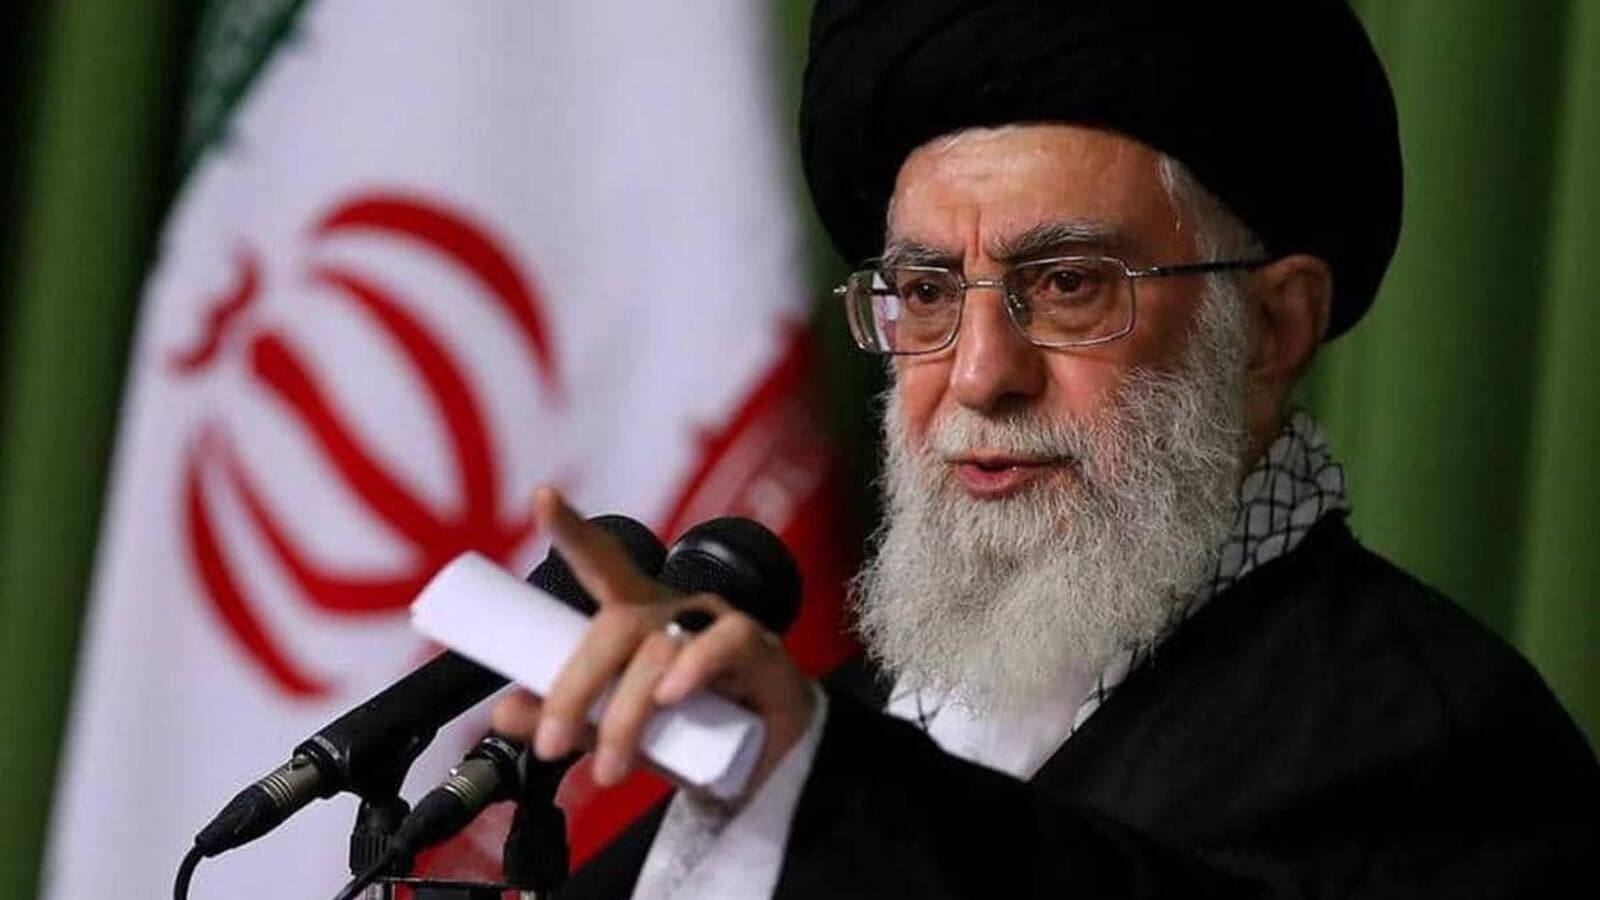 Iran’s supreme leader, Ayatollah Ali Khamenei, speaks during a ceremony in Tehran